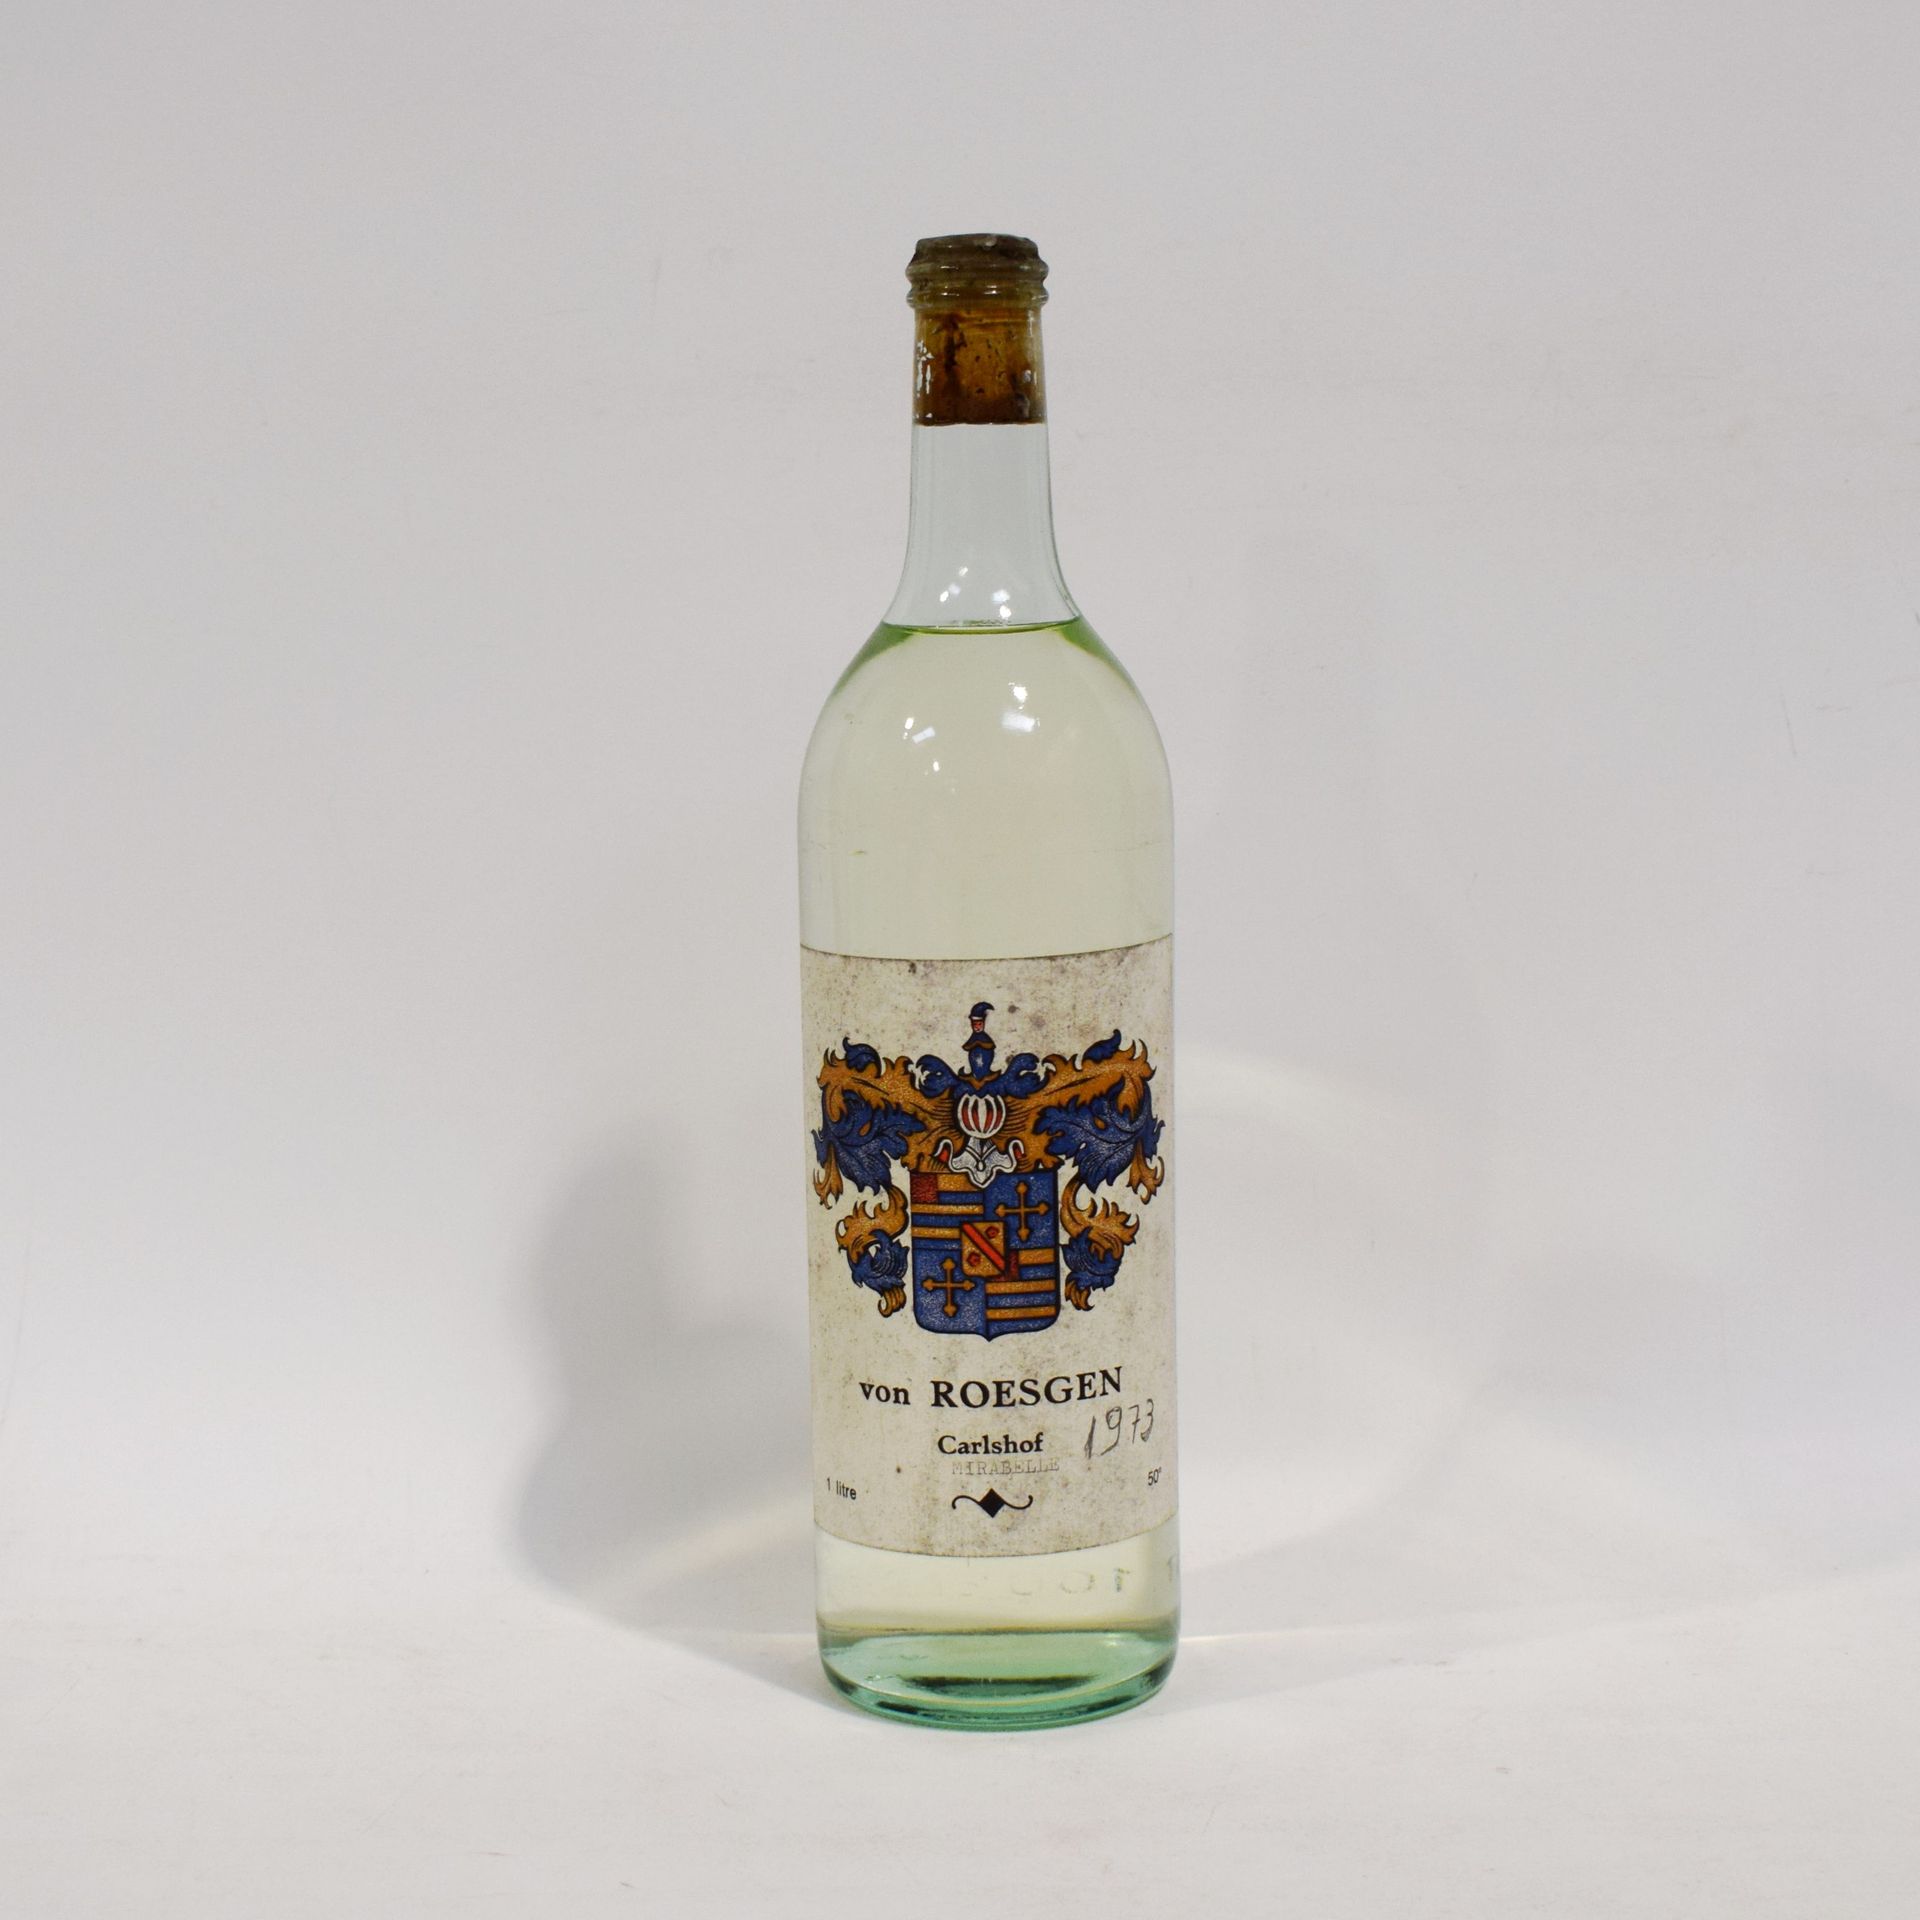 Null (EAU-DE-VIE) Bottle of Mirabelle plum brandy von ROESGEN Carlshof, mention &hellip;